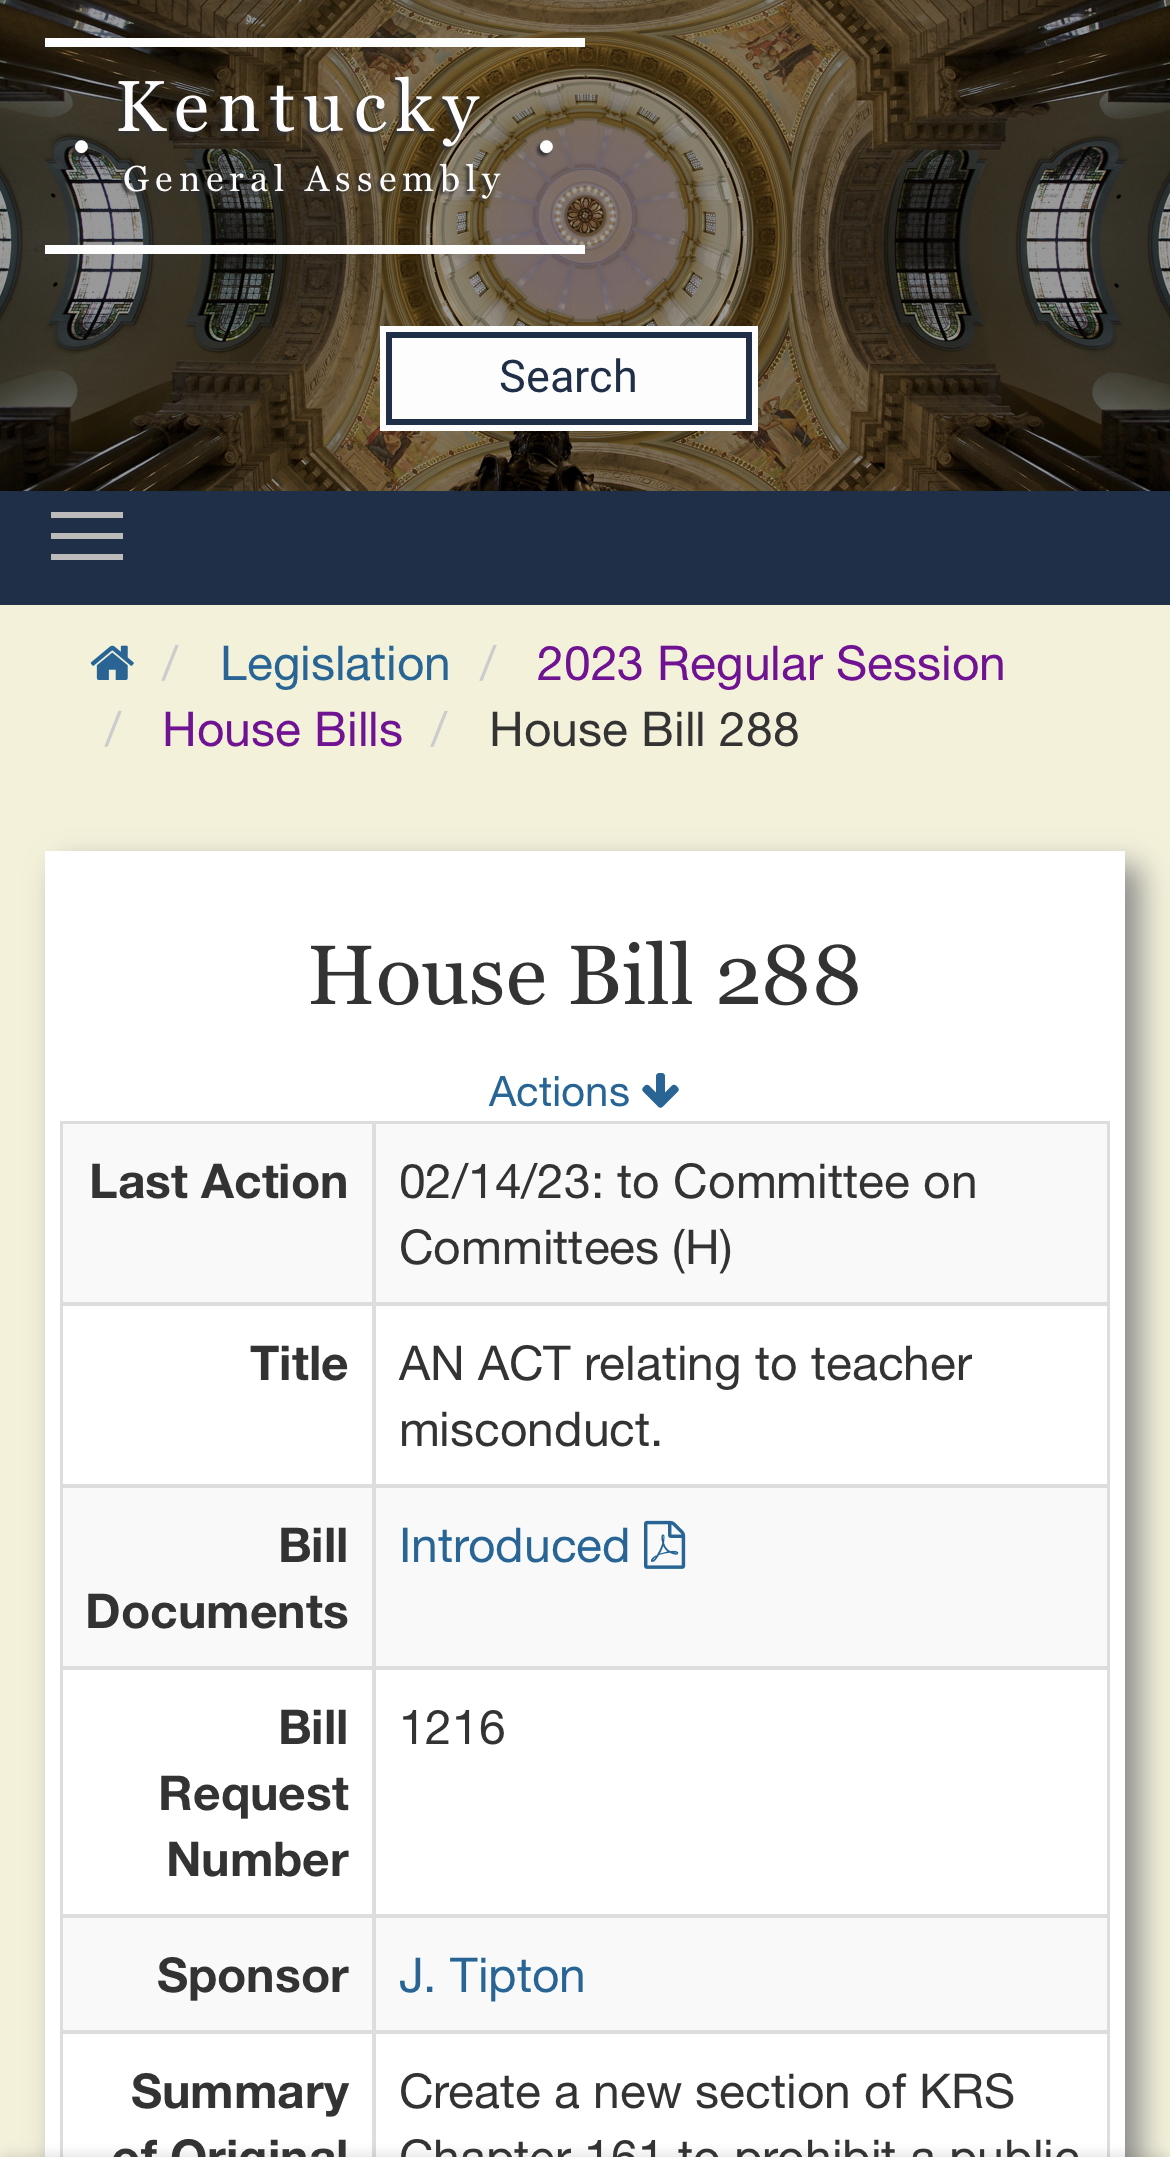 Description of House Bill 288